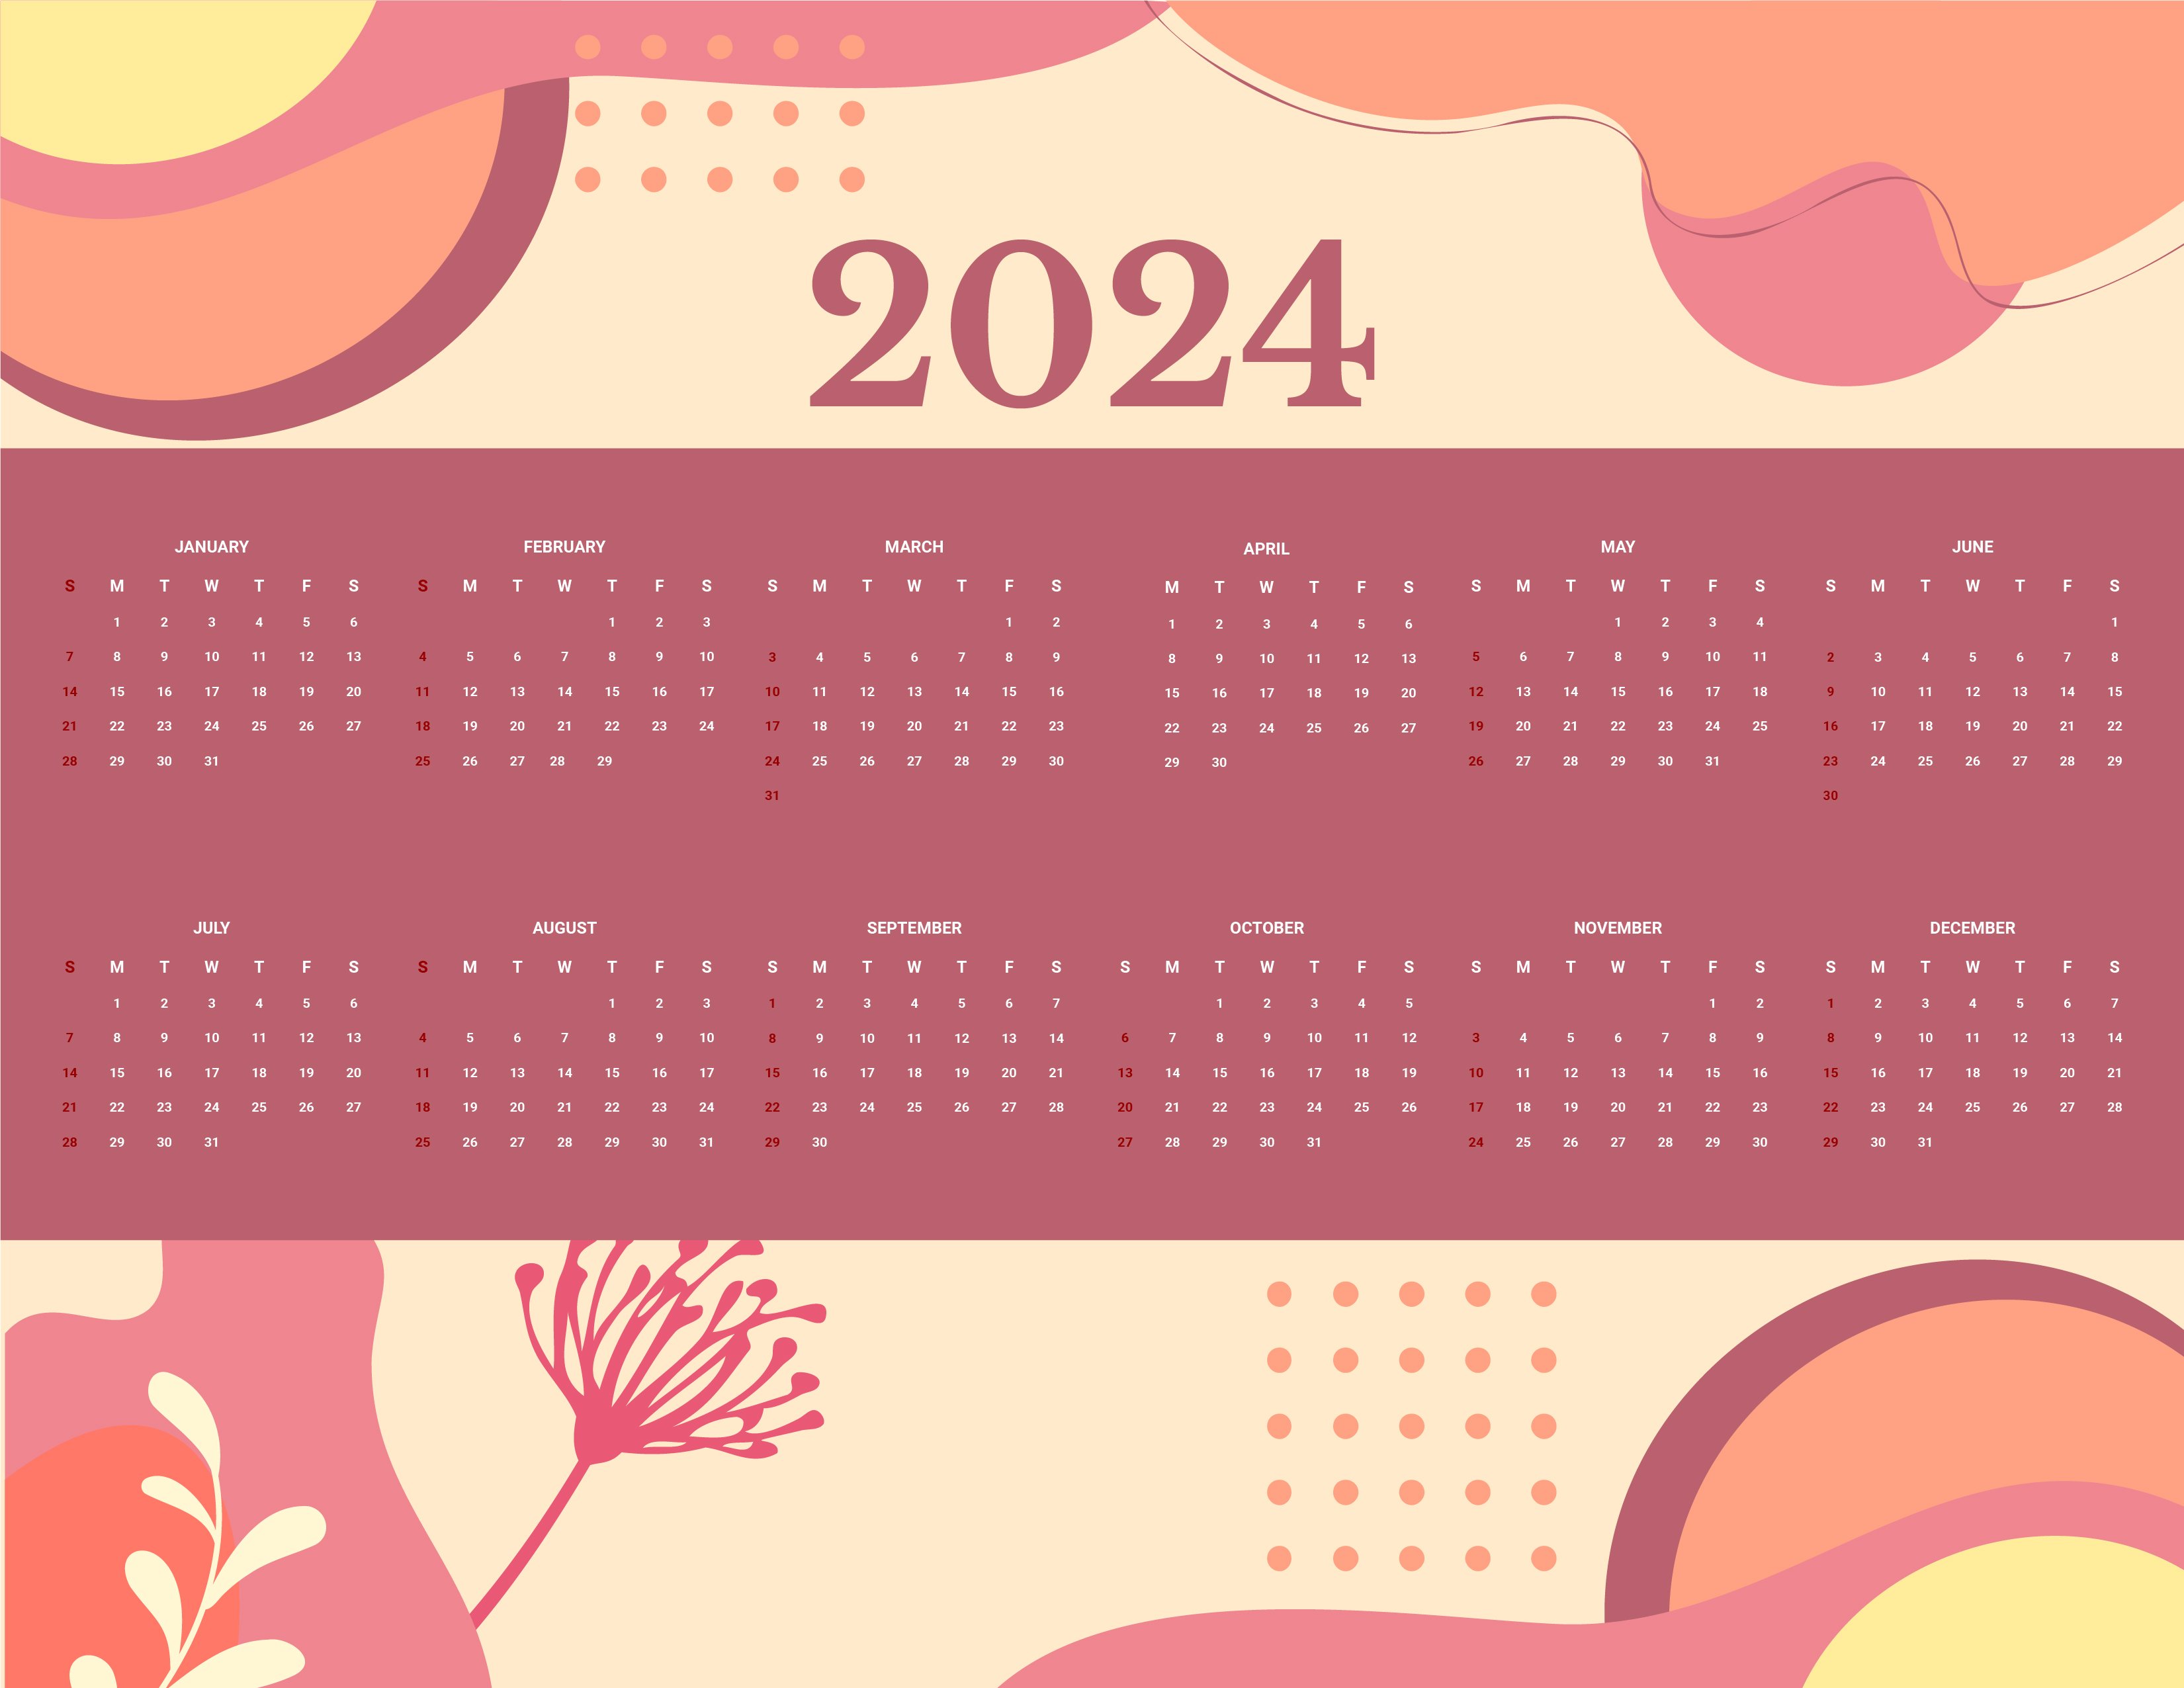 Year 2024 Calendar in Word, Google Docs, Illustrator, EPS, SVG, JPG